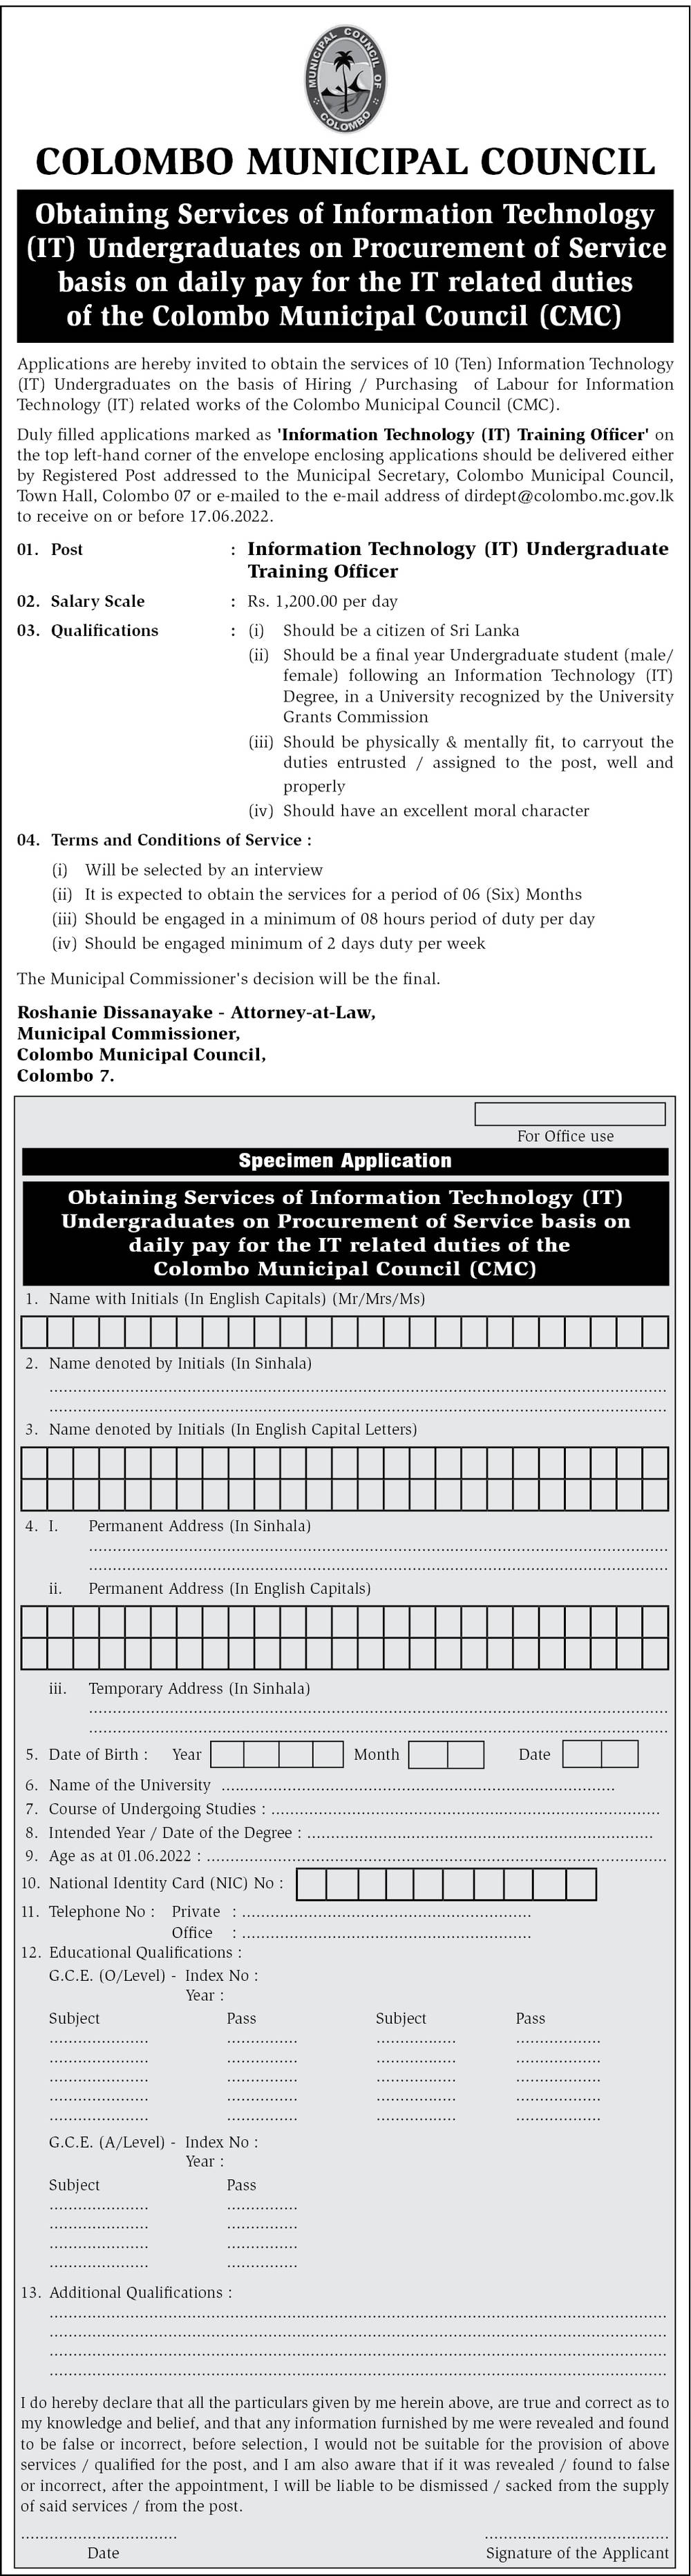 colombo municipal council new trainee job application